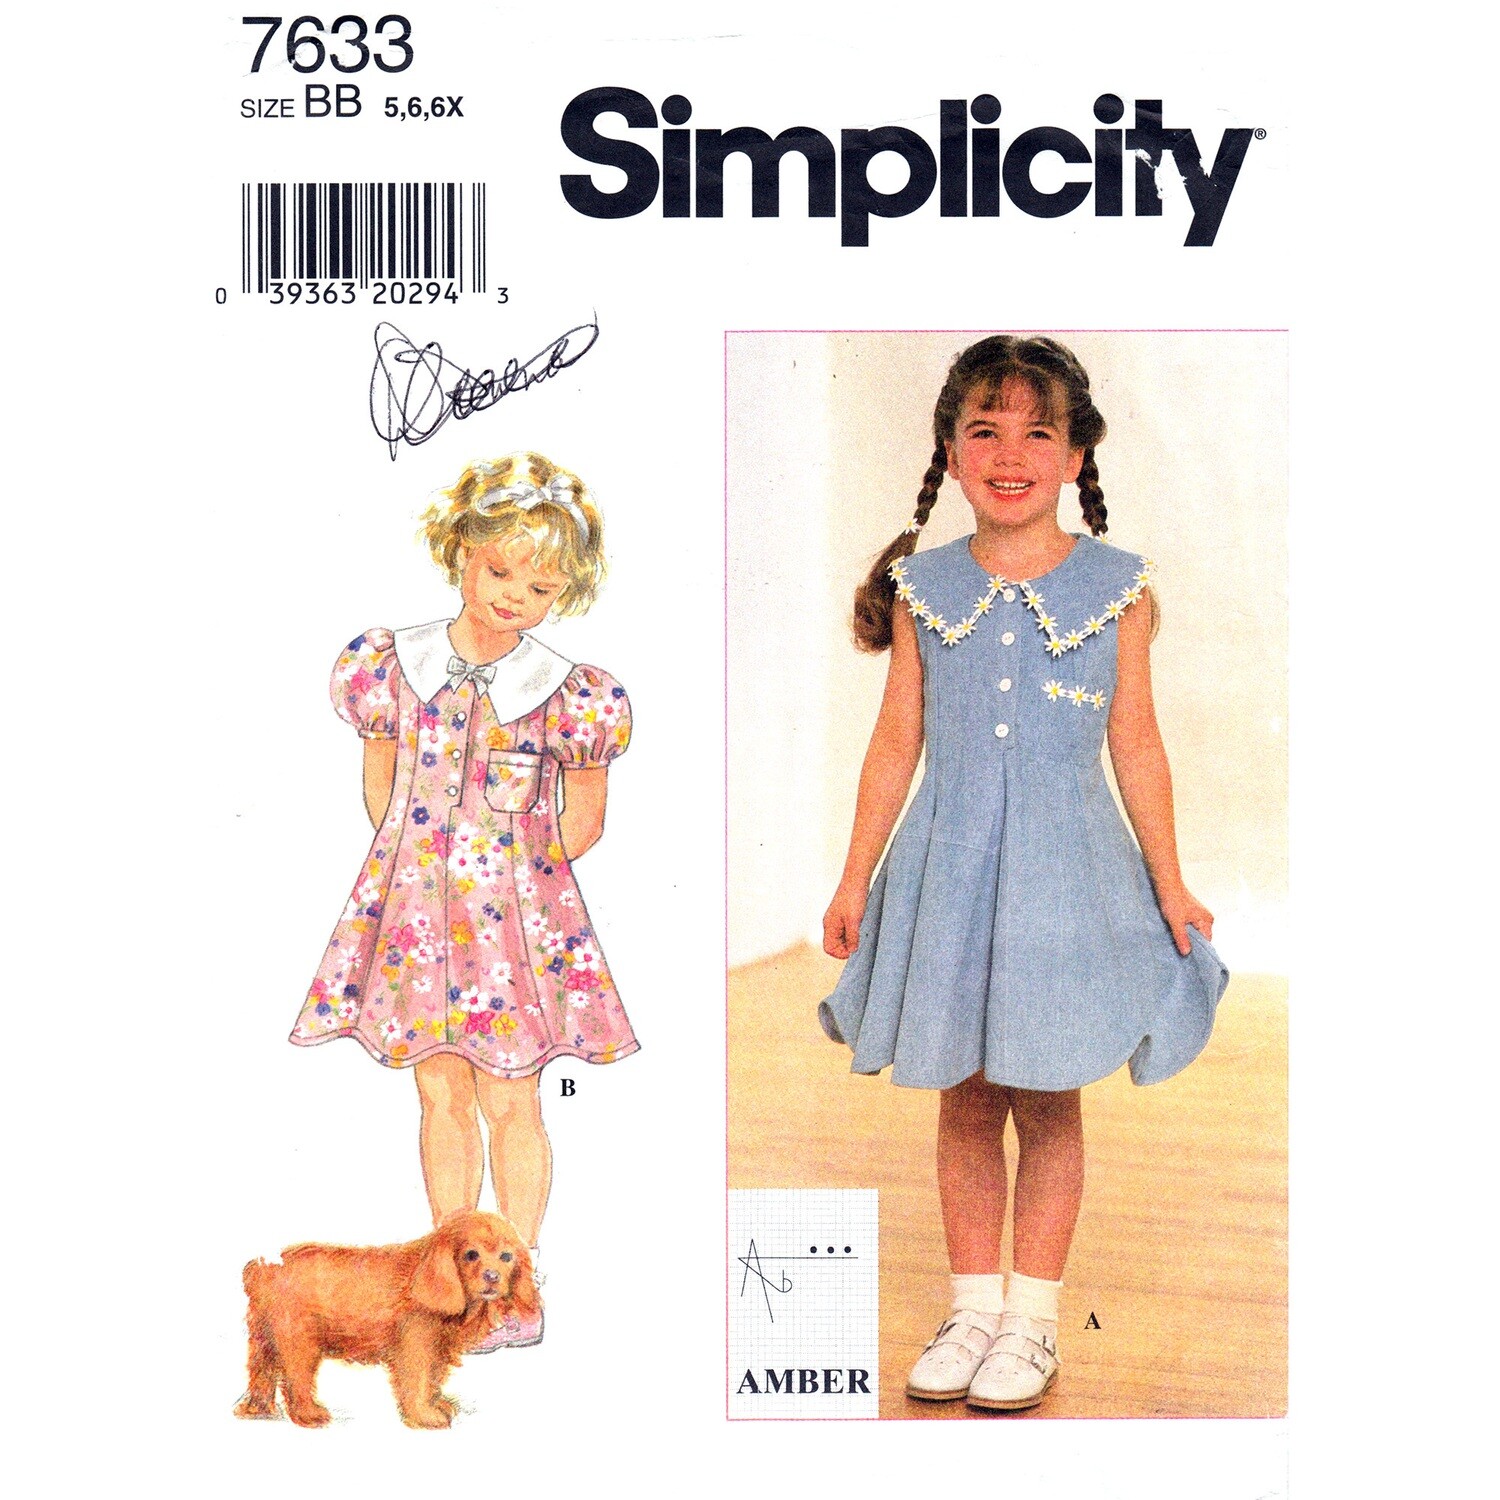 Simplicity 7633 girls pattern